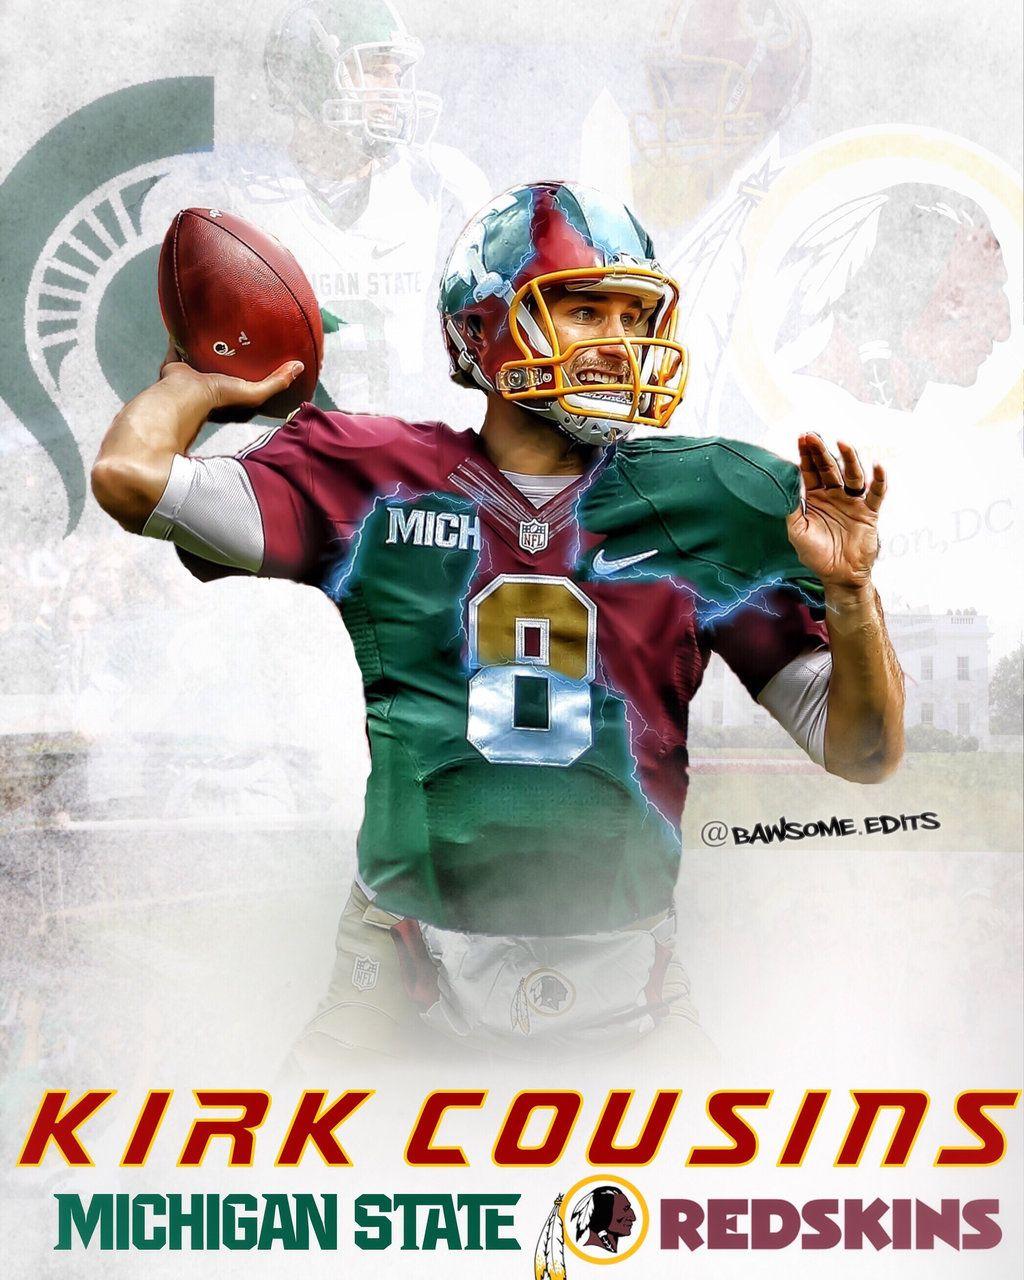 Former Vikings coach thinks Kirk Cousins can lead team to Super Bowl